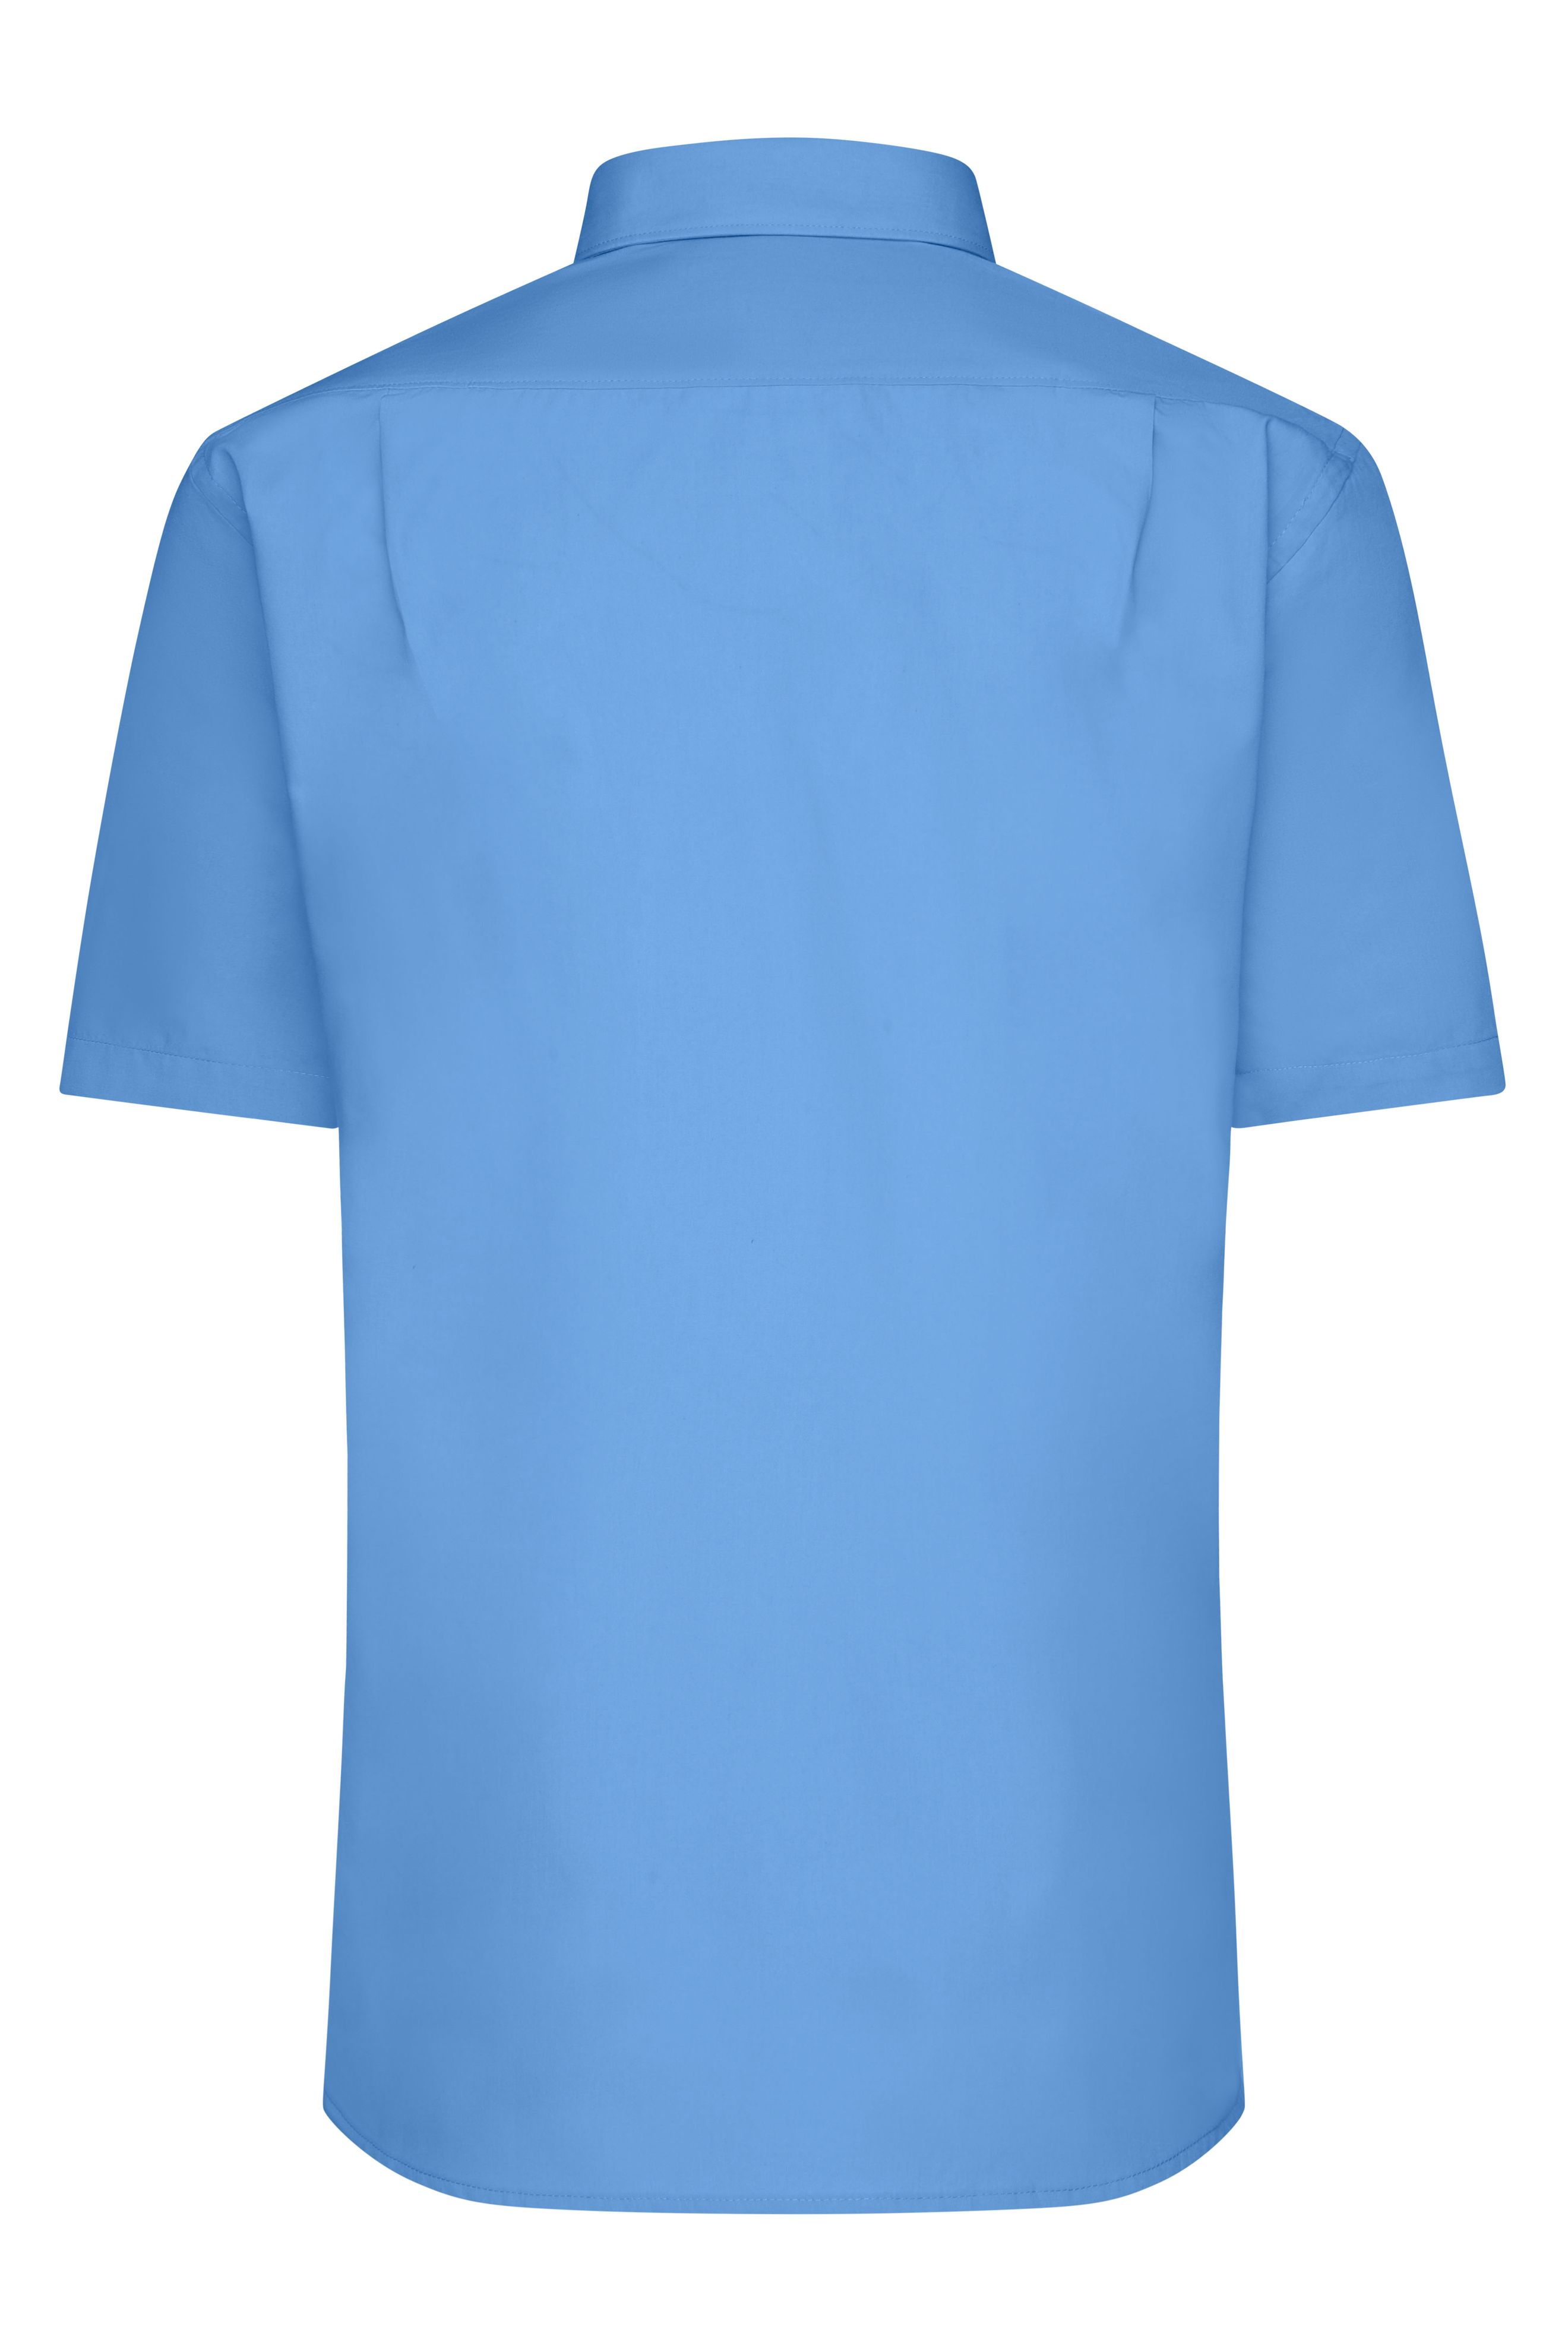 Men's Shirt Shortsleeve Poplin JN680 Klassisches Shirt aus pflegeleichtem Mischgewebe